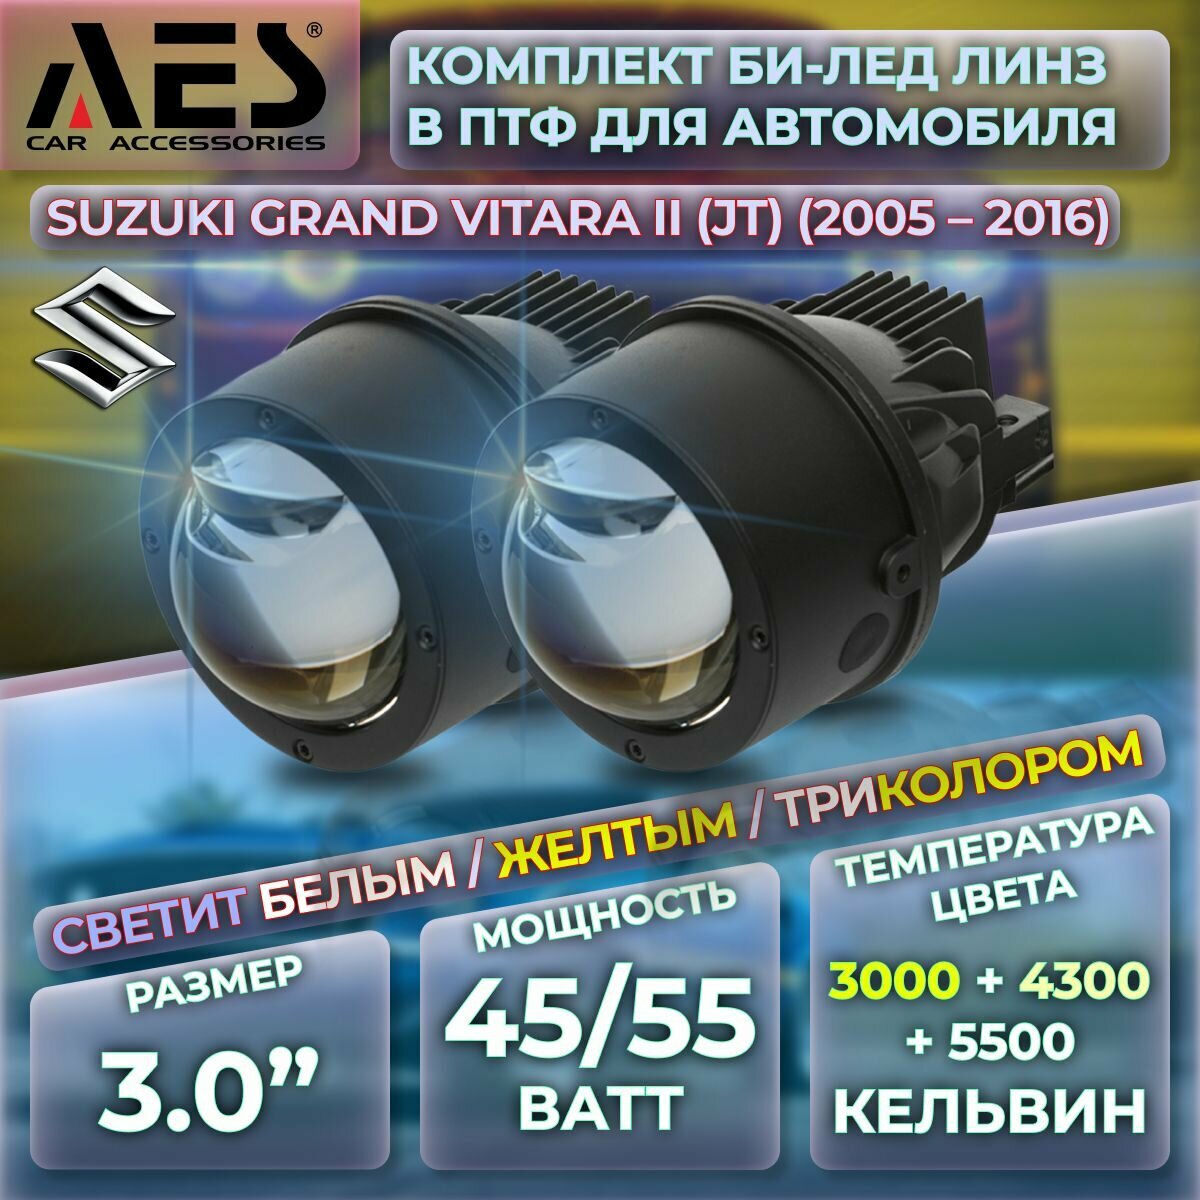 Комплект Би-лед линз в ПТФ для Suzuki Grand Vitara II (JT) (2005-2016) Q8proTriColor Foglight Bi-LED Laser 5500/4300/3000K (2 модуля, 2 кронштейна)